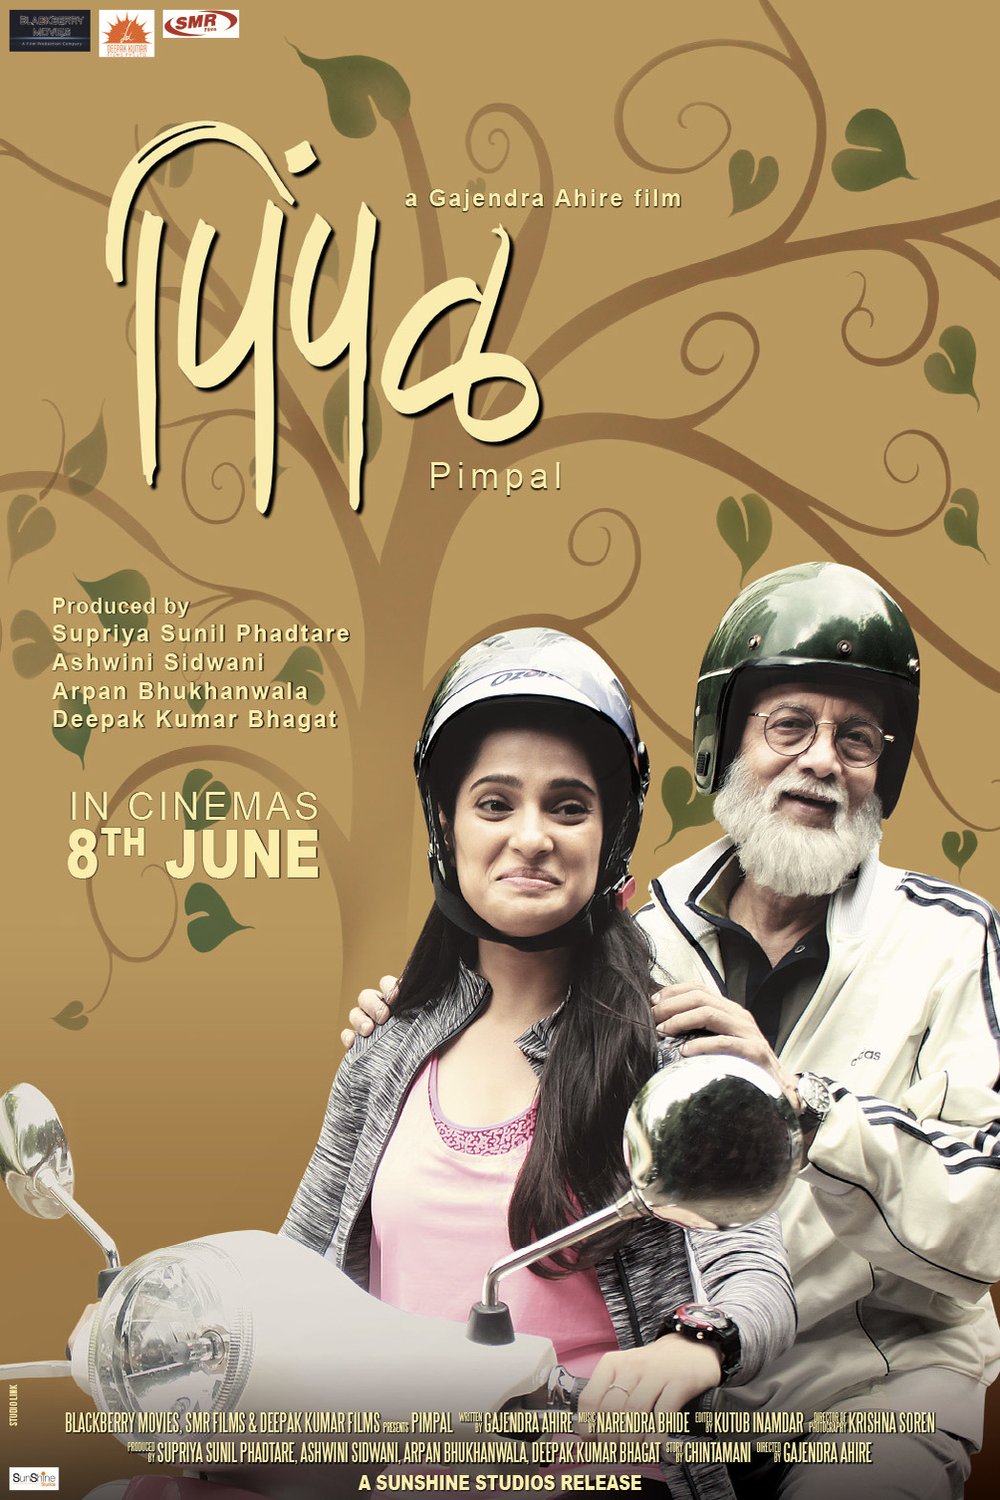 Marathi poster of the movie Pimpal